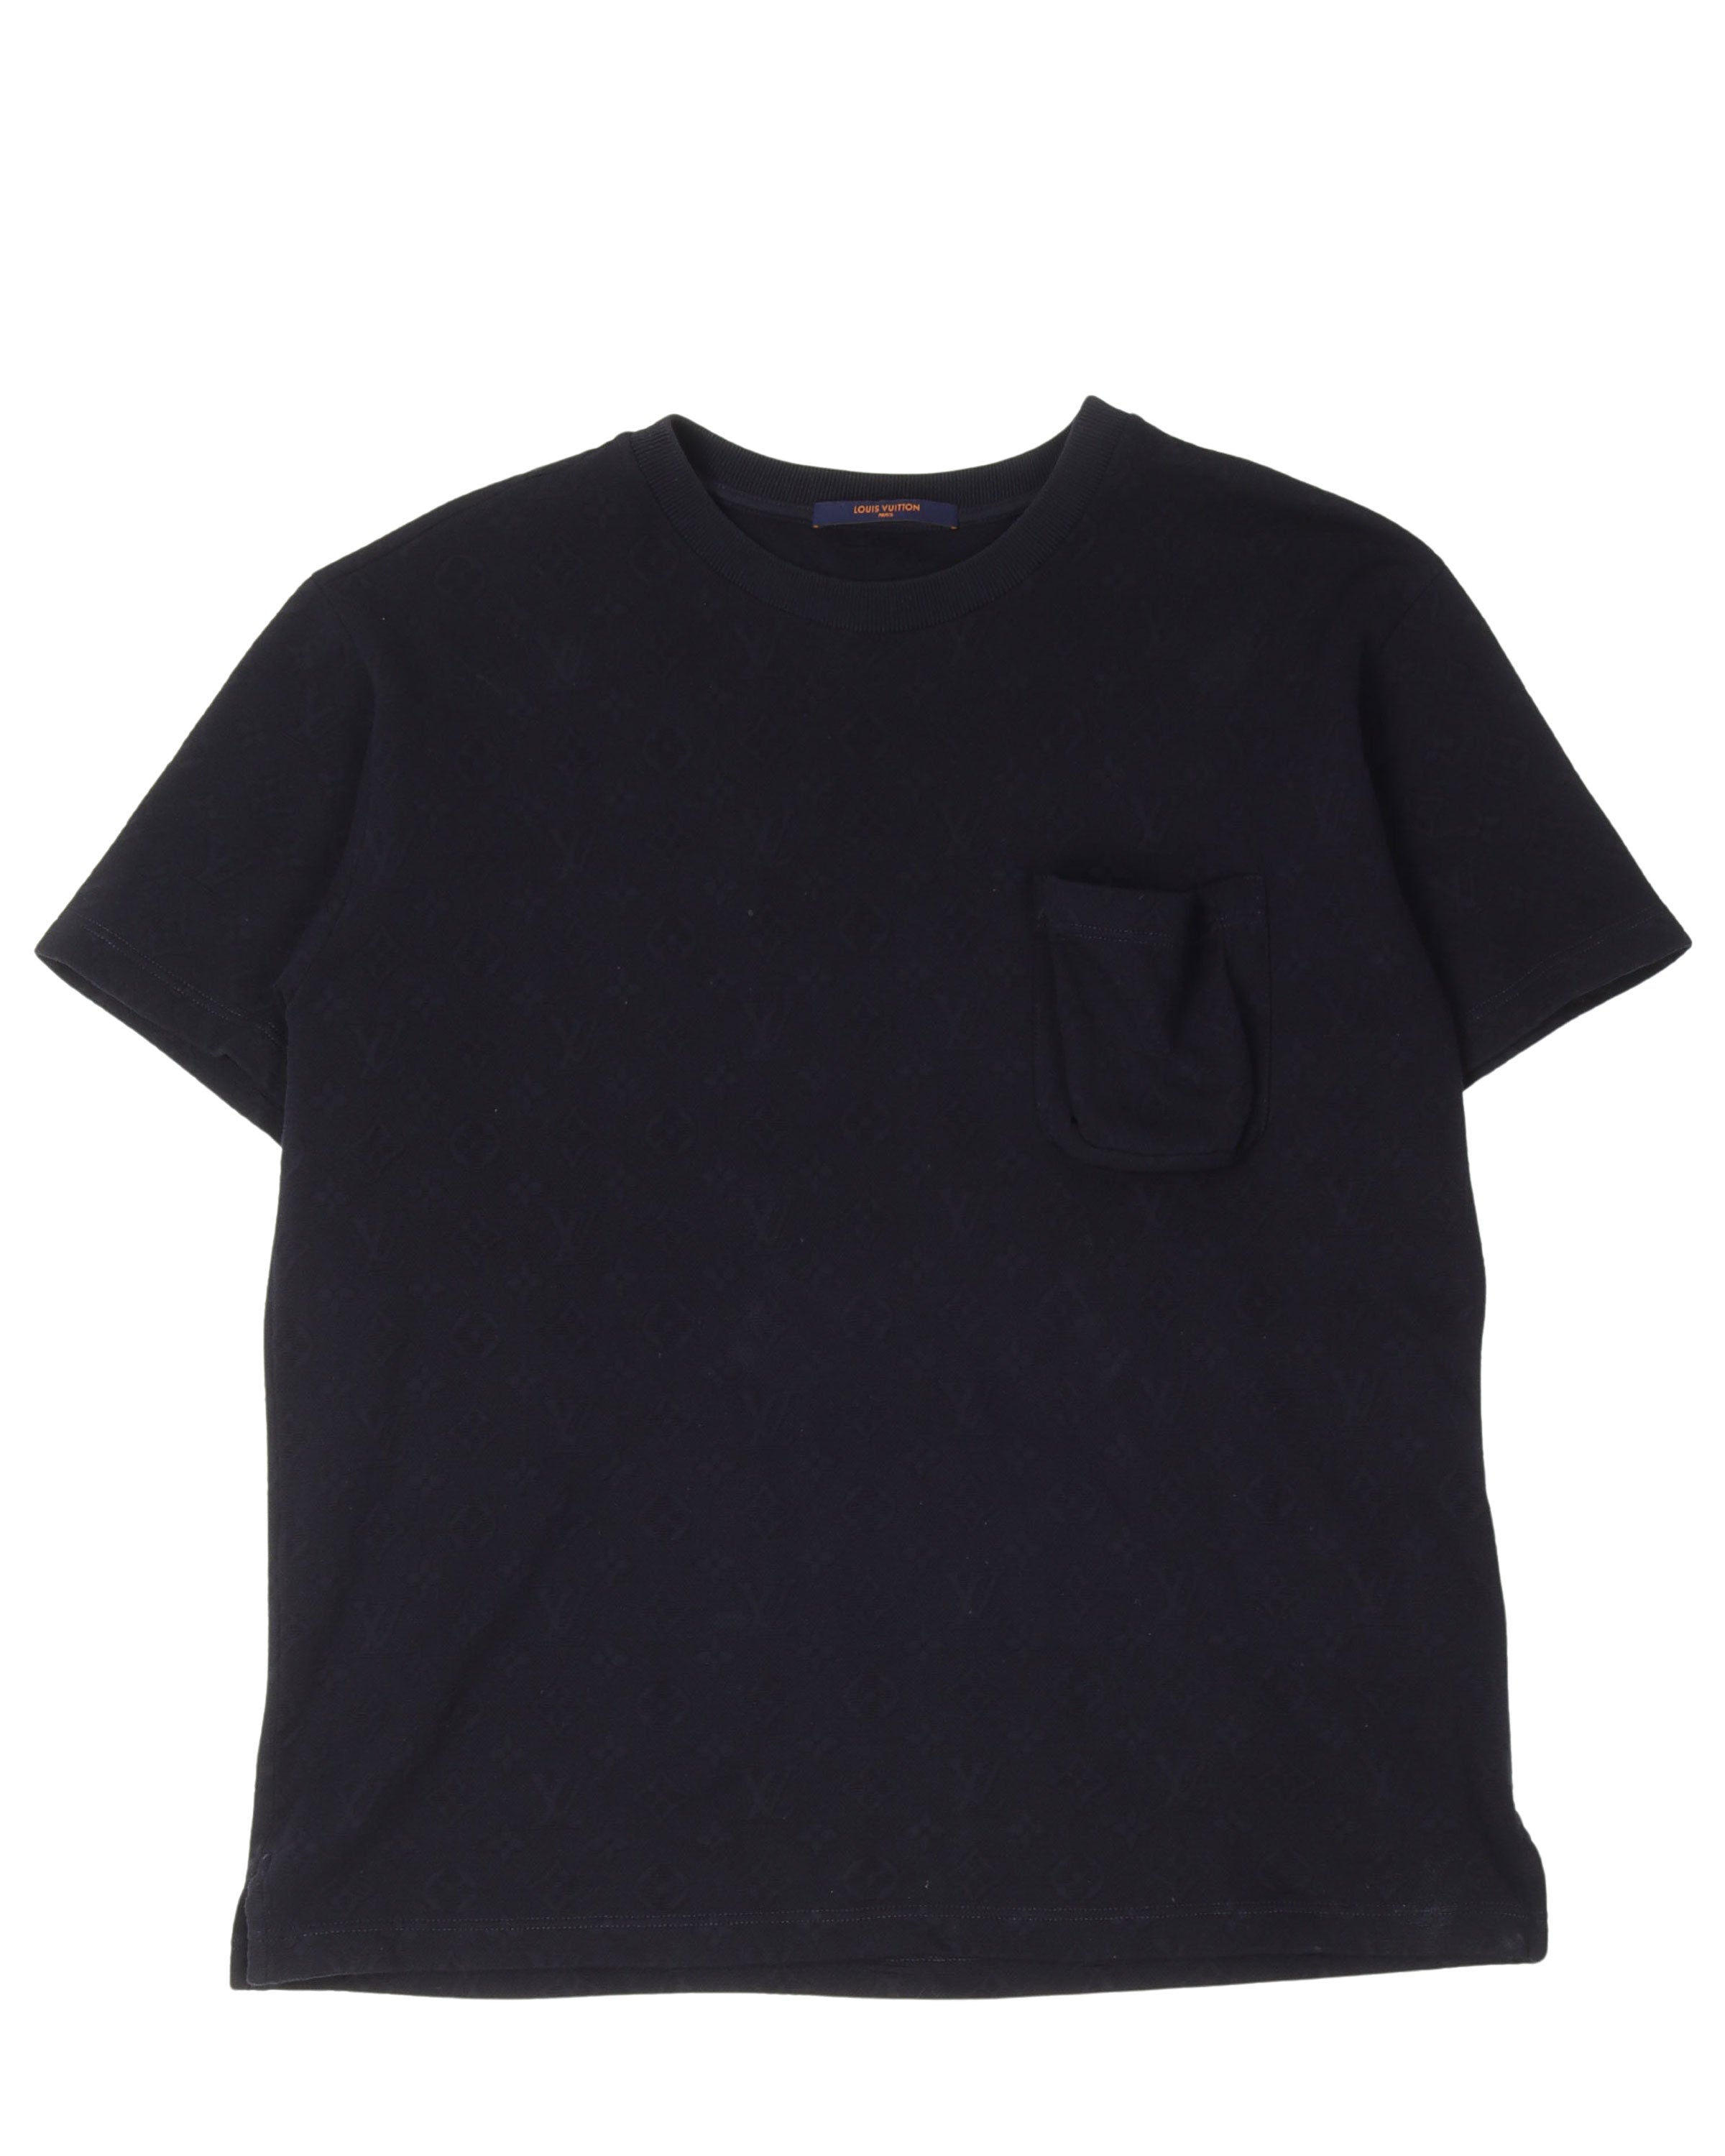 Louis Vuitton Monogram Pocket Knit T-Shirt Night Blue. Size Xs